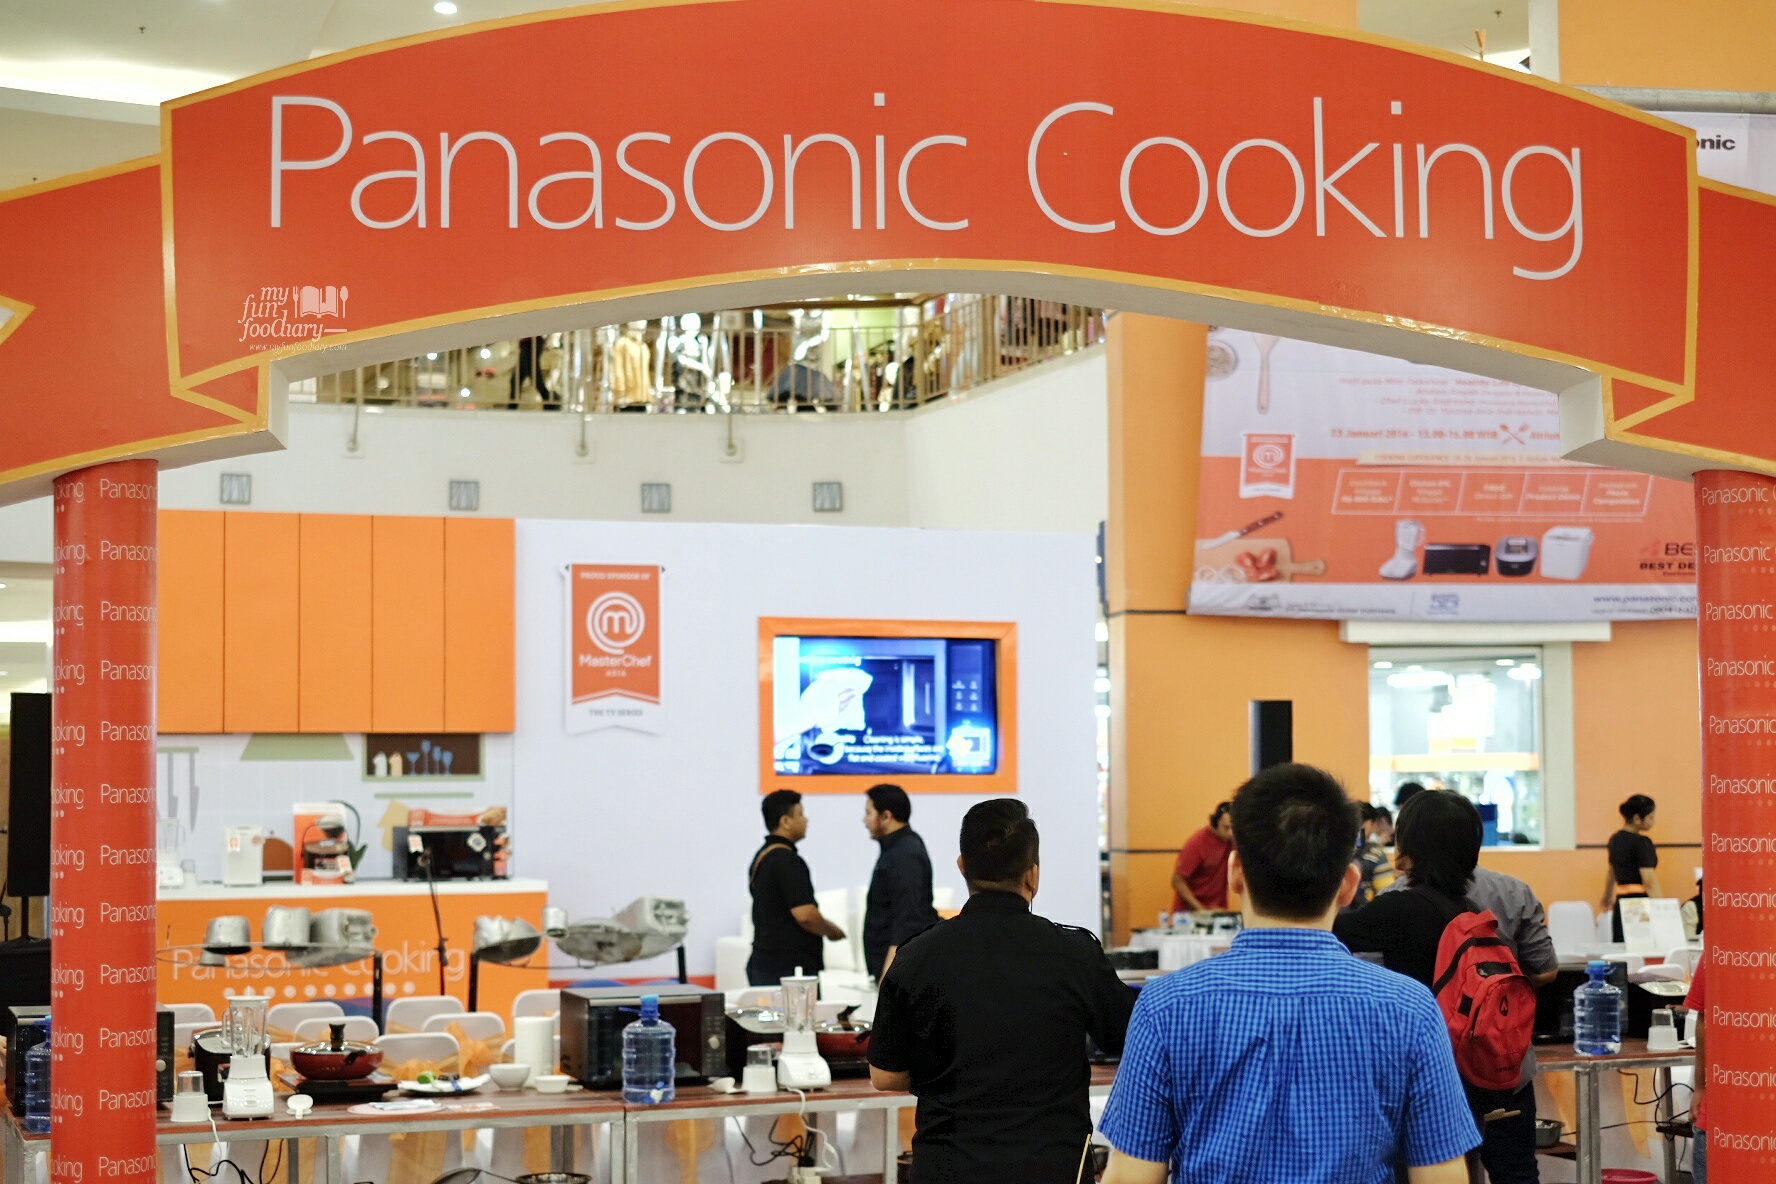 Top 10 Finalist Panasonic Cooking Competition at Atrium MKG5 Kelapa Gading by Myfunfoodiary